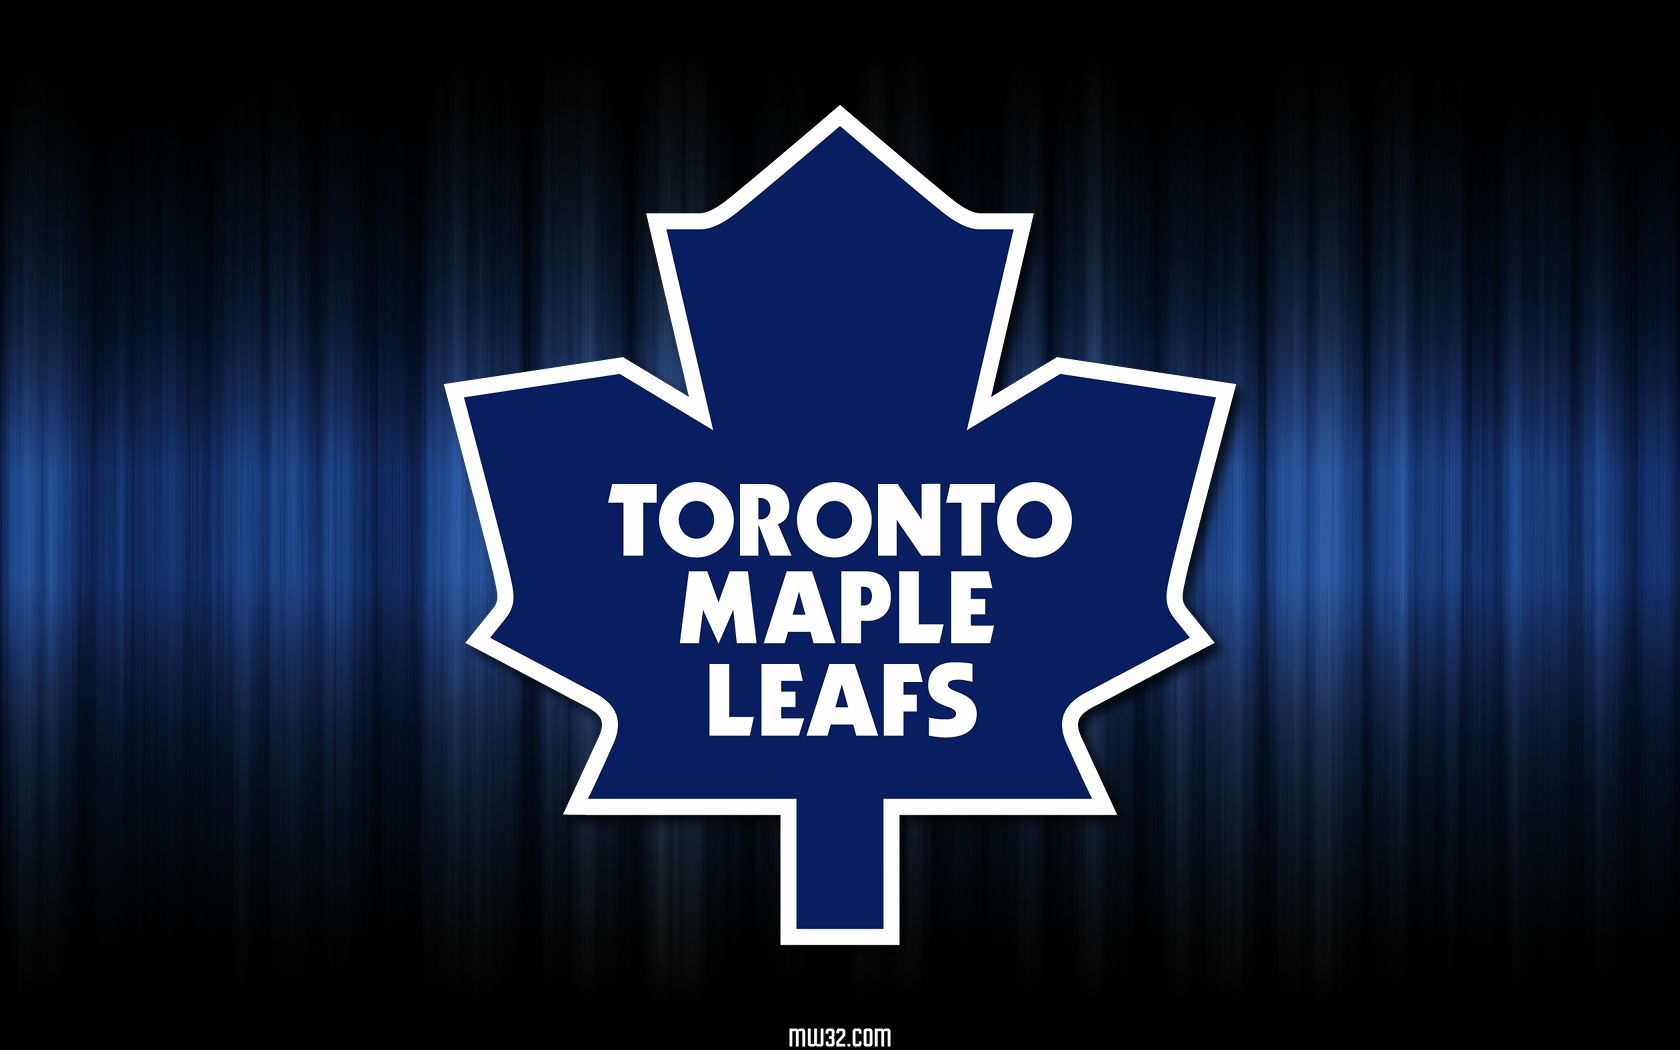 2023 Toronto Maple Leafs wallpaper – Pro Sports Backgrounds